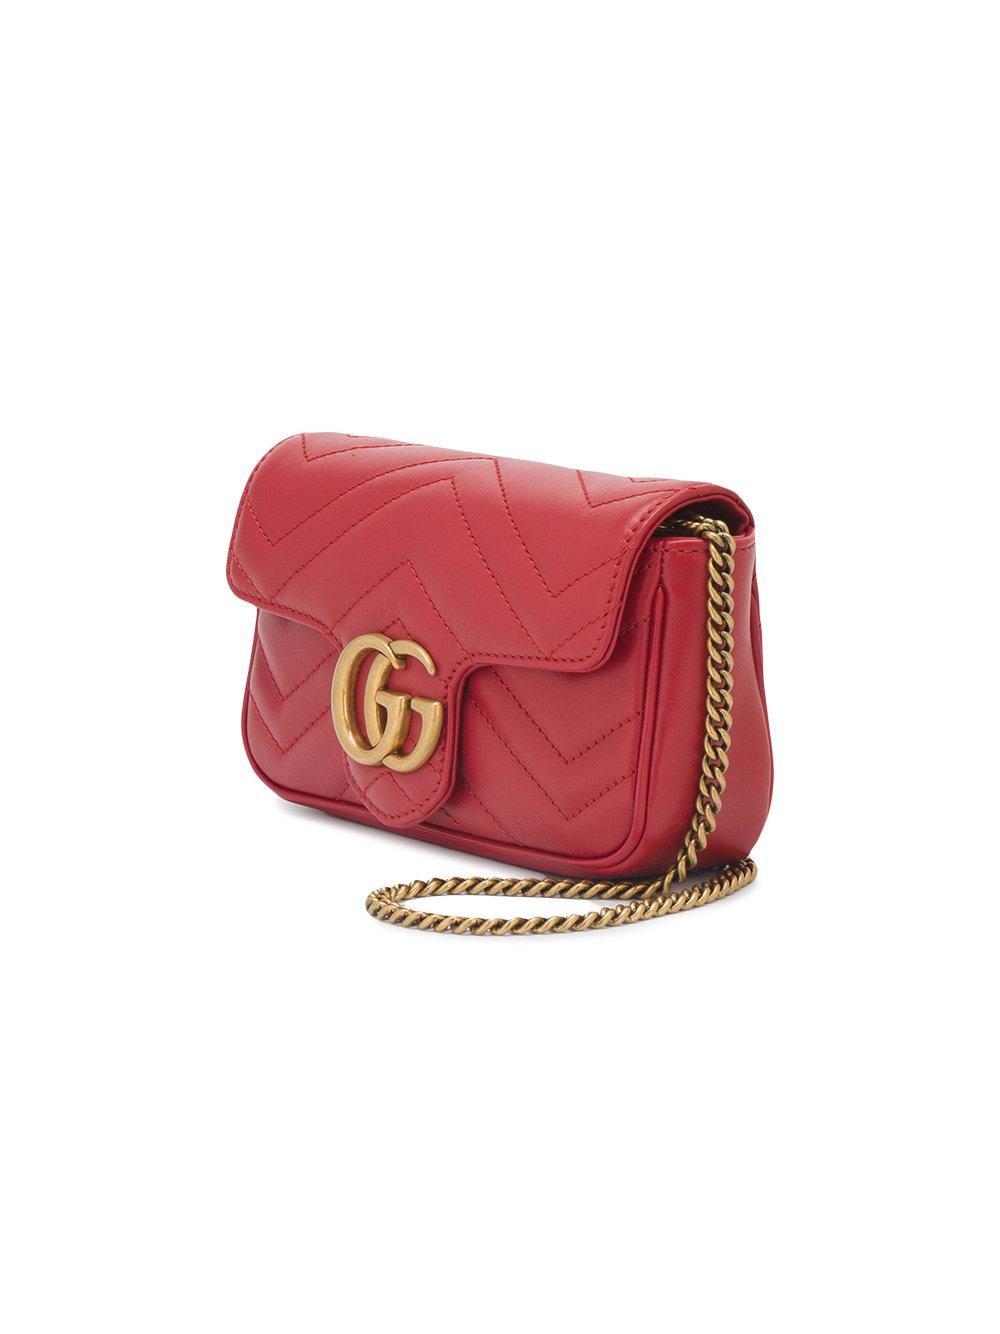 Gucci Super Mini Marmont Matelassé Bag in Red - Lyst